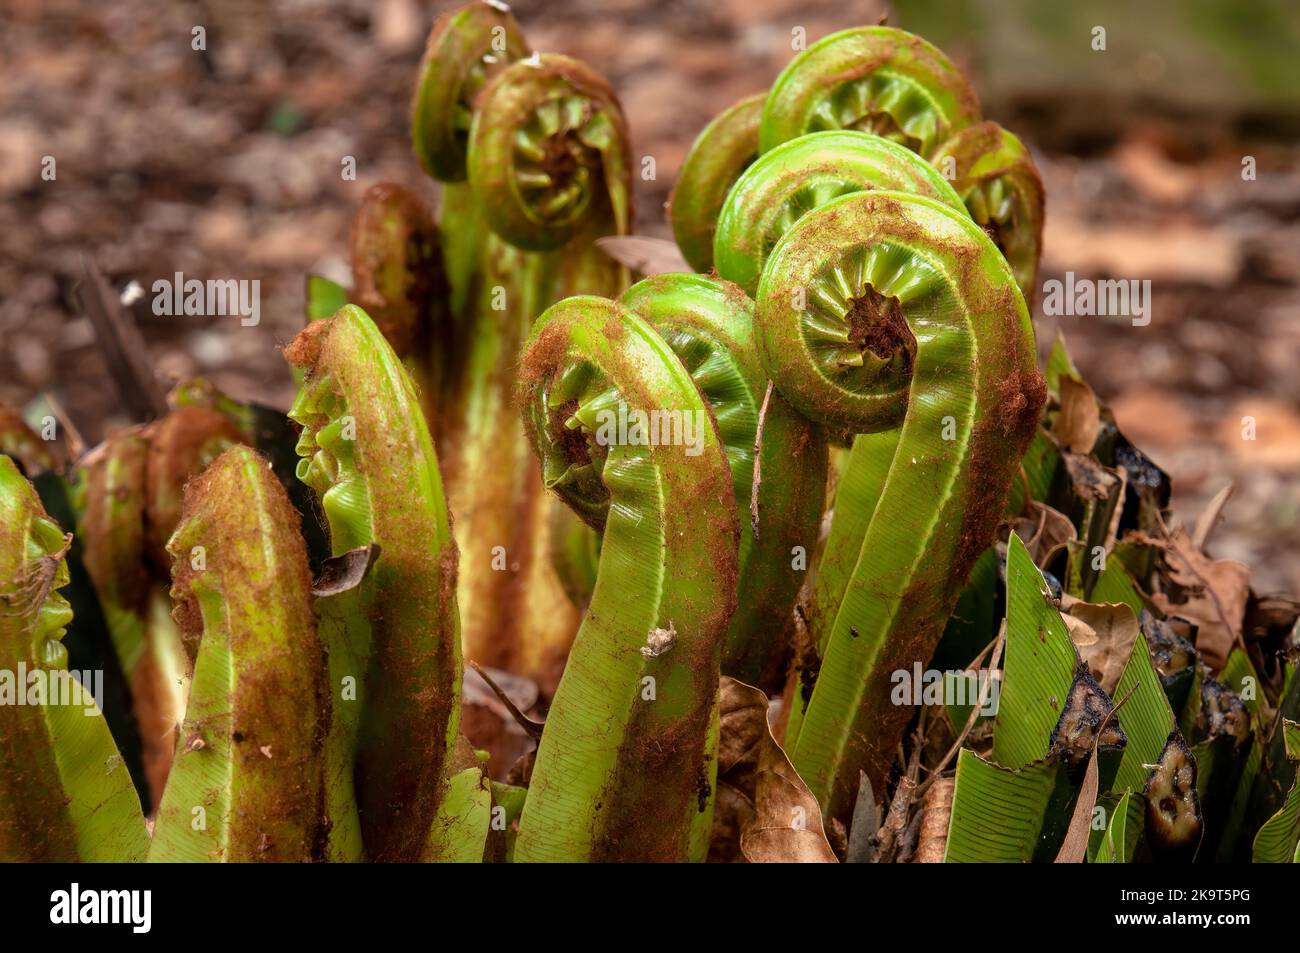 Sydney Australia, new growth of a asplenium australasicum or bird's nest fern in sunlight Stock Photo